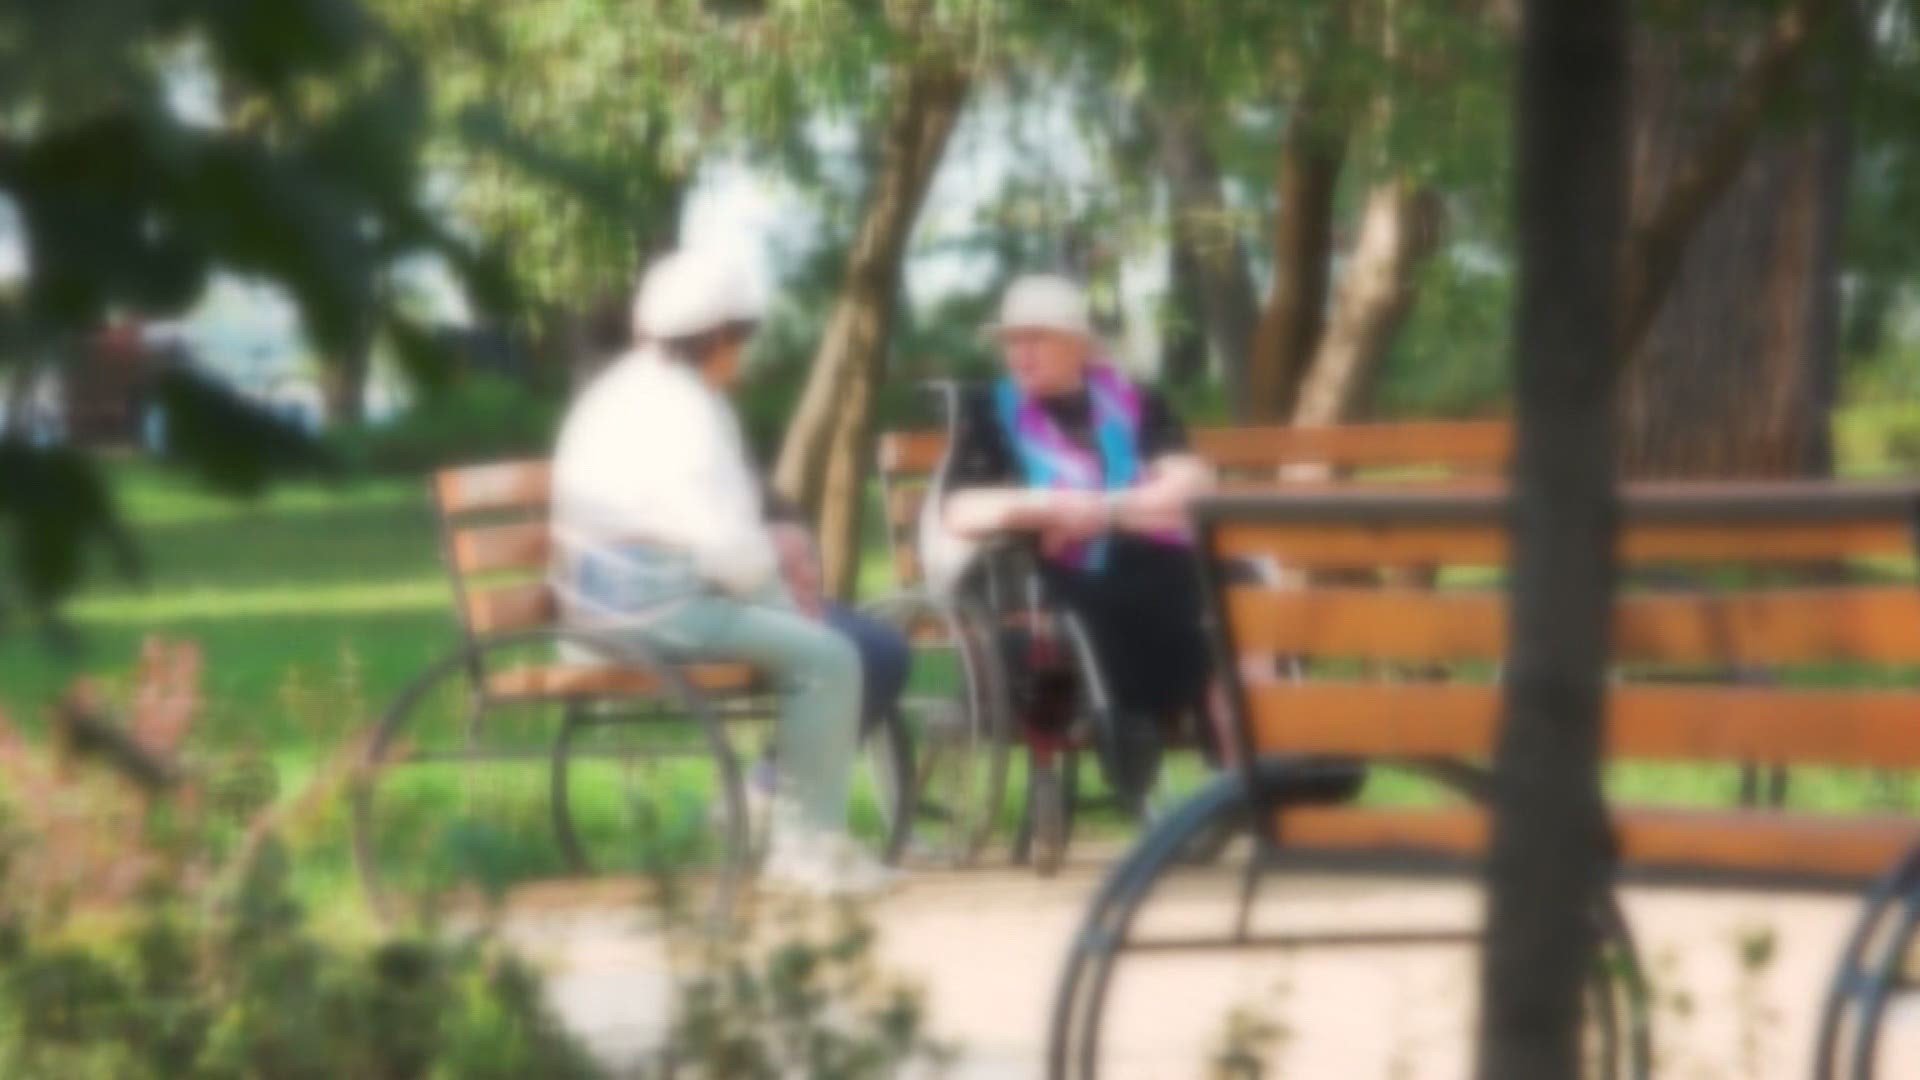 Michigan to allow outdoor visits at nursing homes, long-term facilities starting Sept. 15